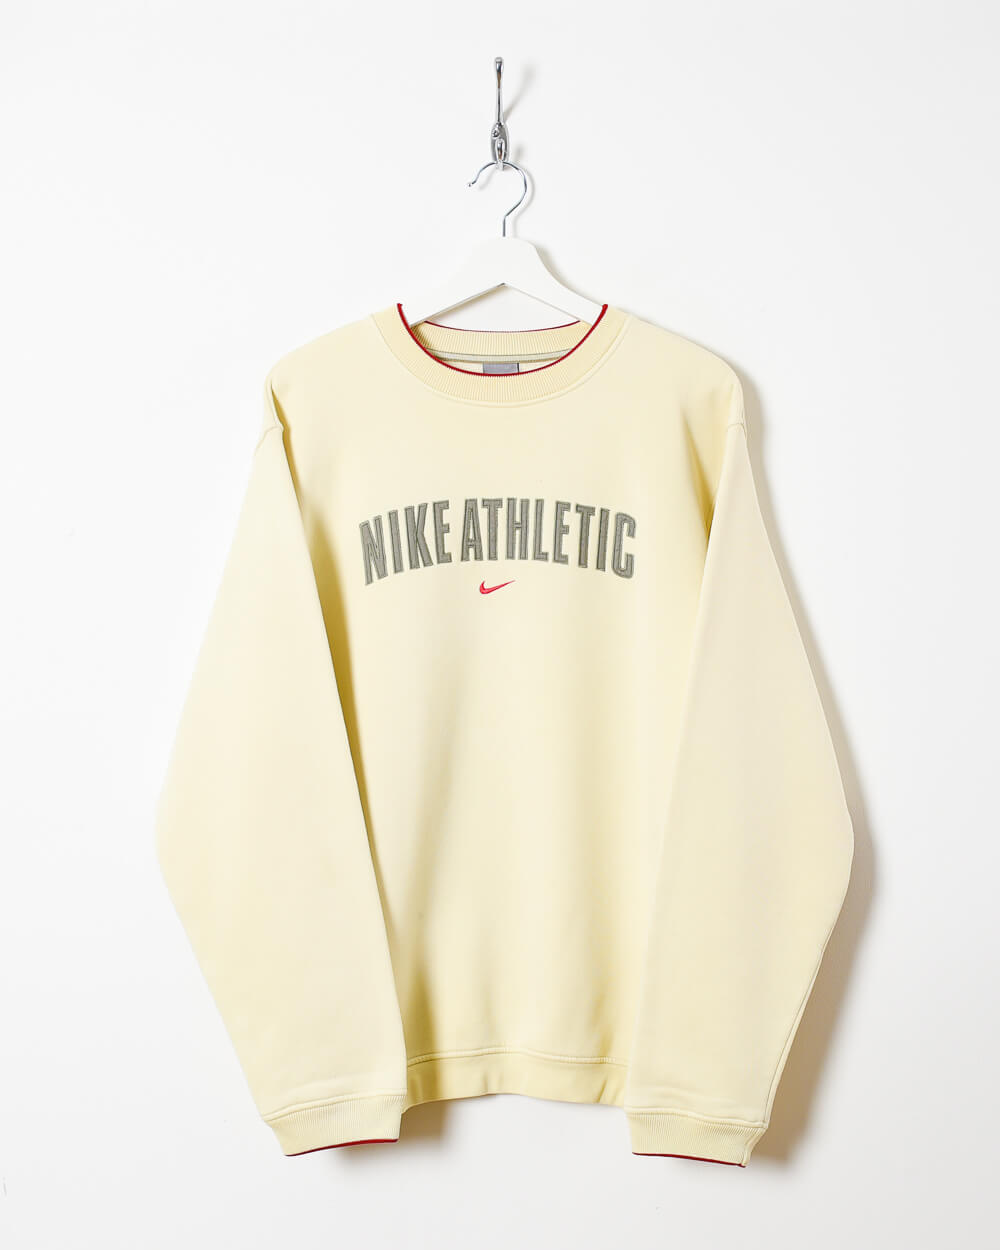 Neutral Nike Athletic Sweatshirt - Medium